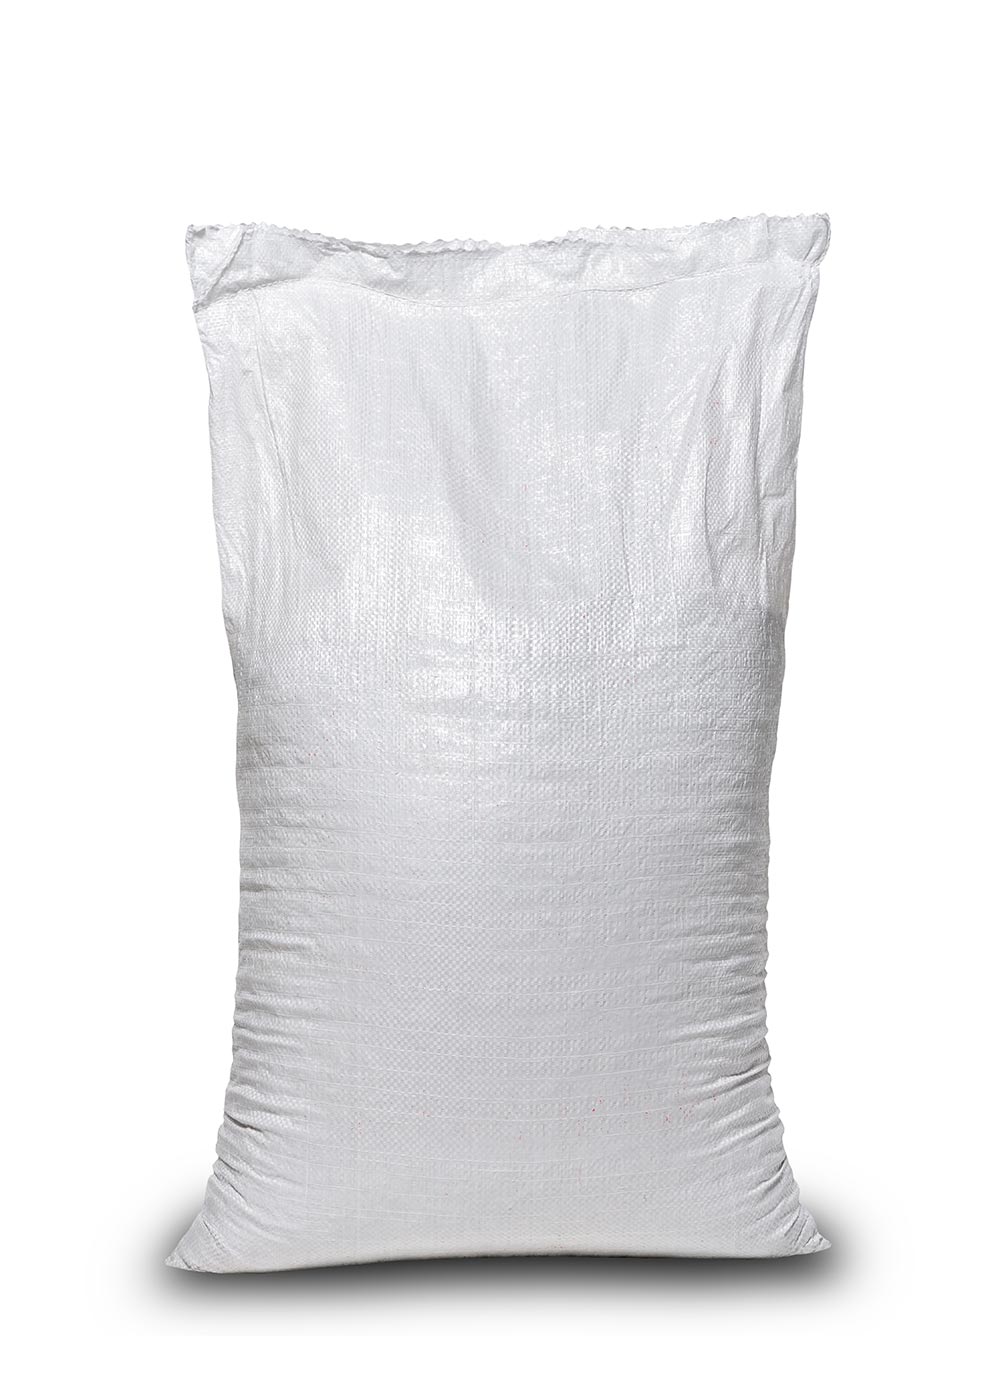 Atlantic Poly - Custom Polypropylene Bags